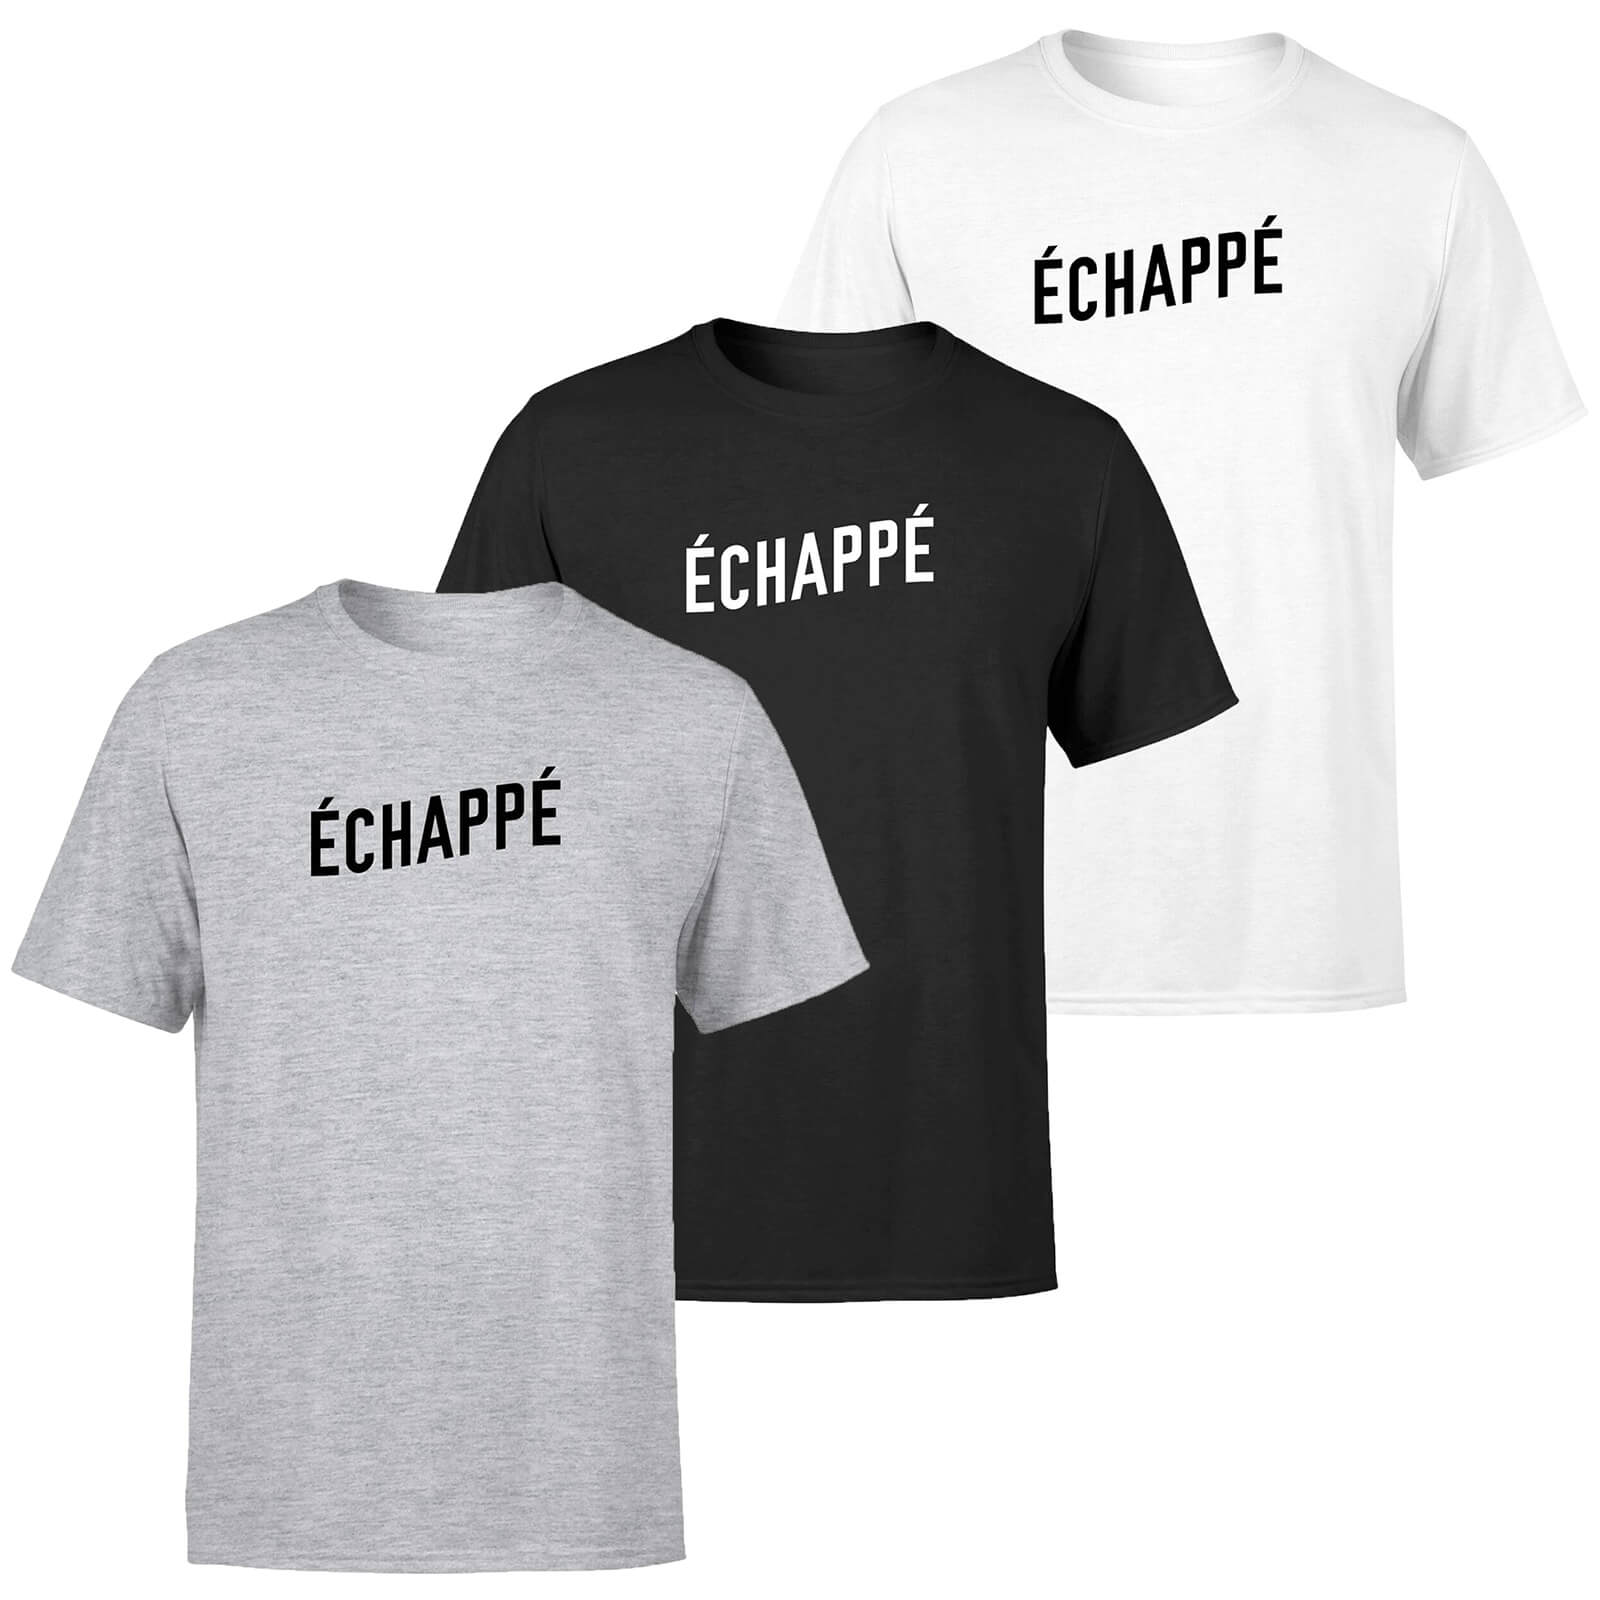 Echappe Men's T-Shirt - XL - Grey